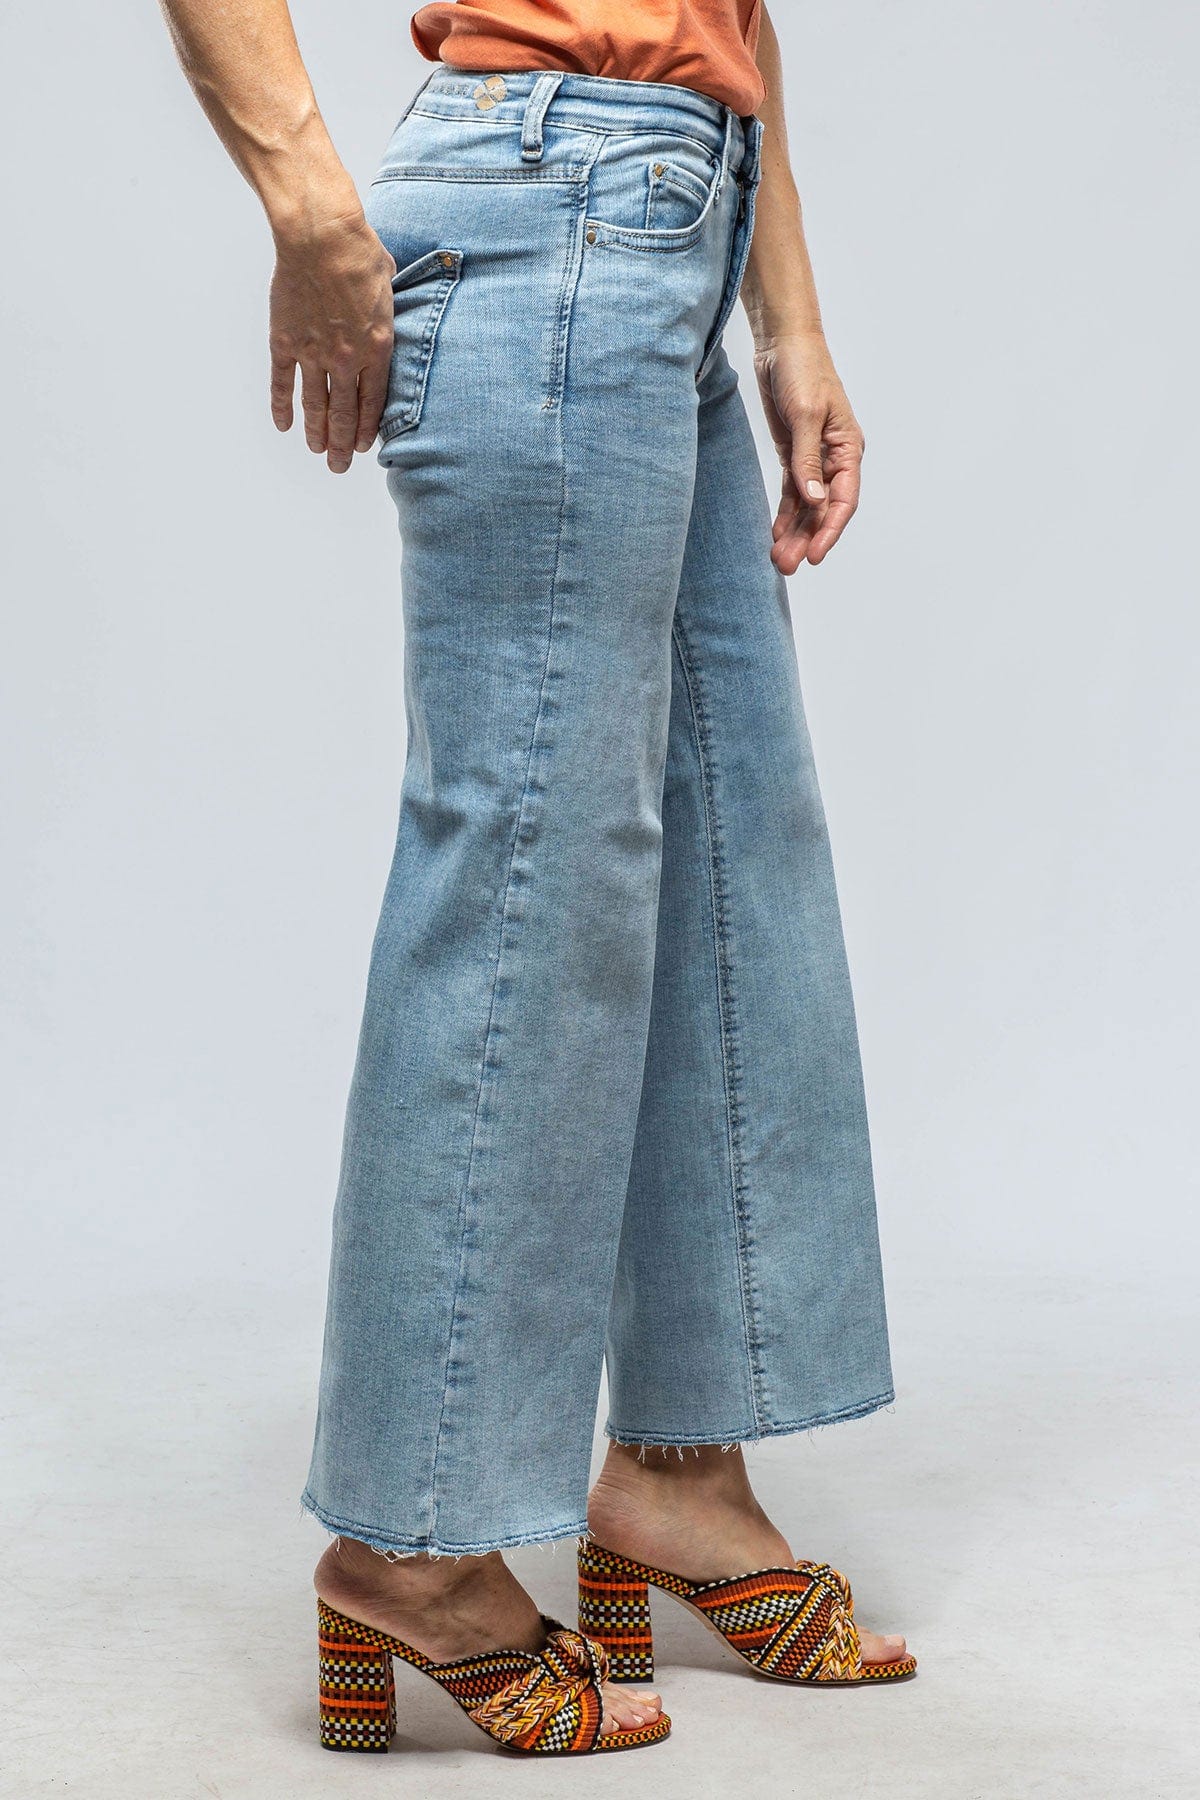 Women Casual High Waist Pants Ladies Summer Baggy Loungewear Trousers Loose  Fit | eBay